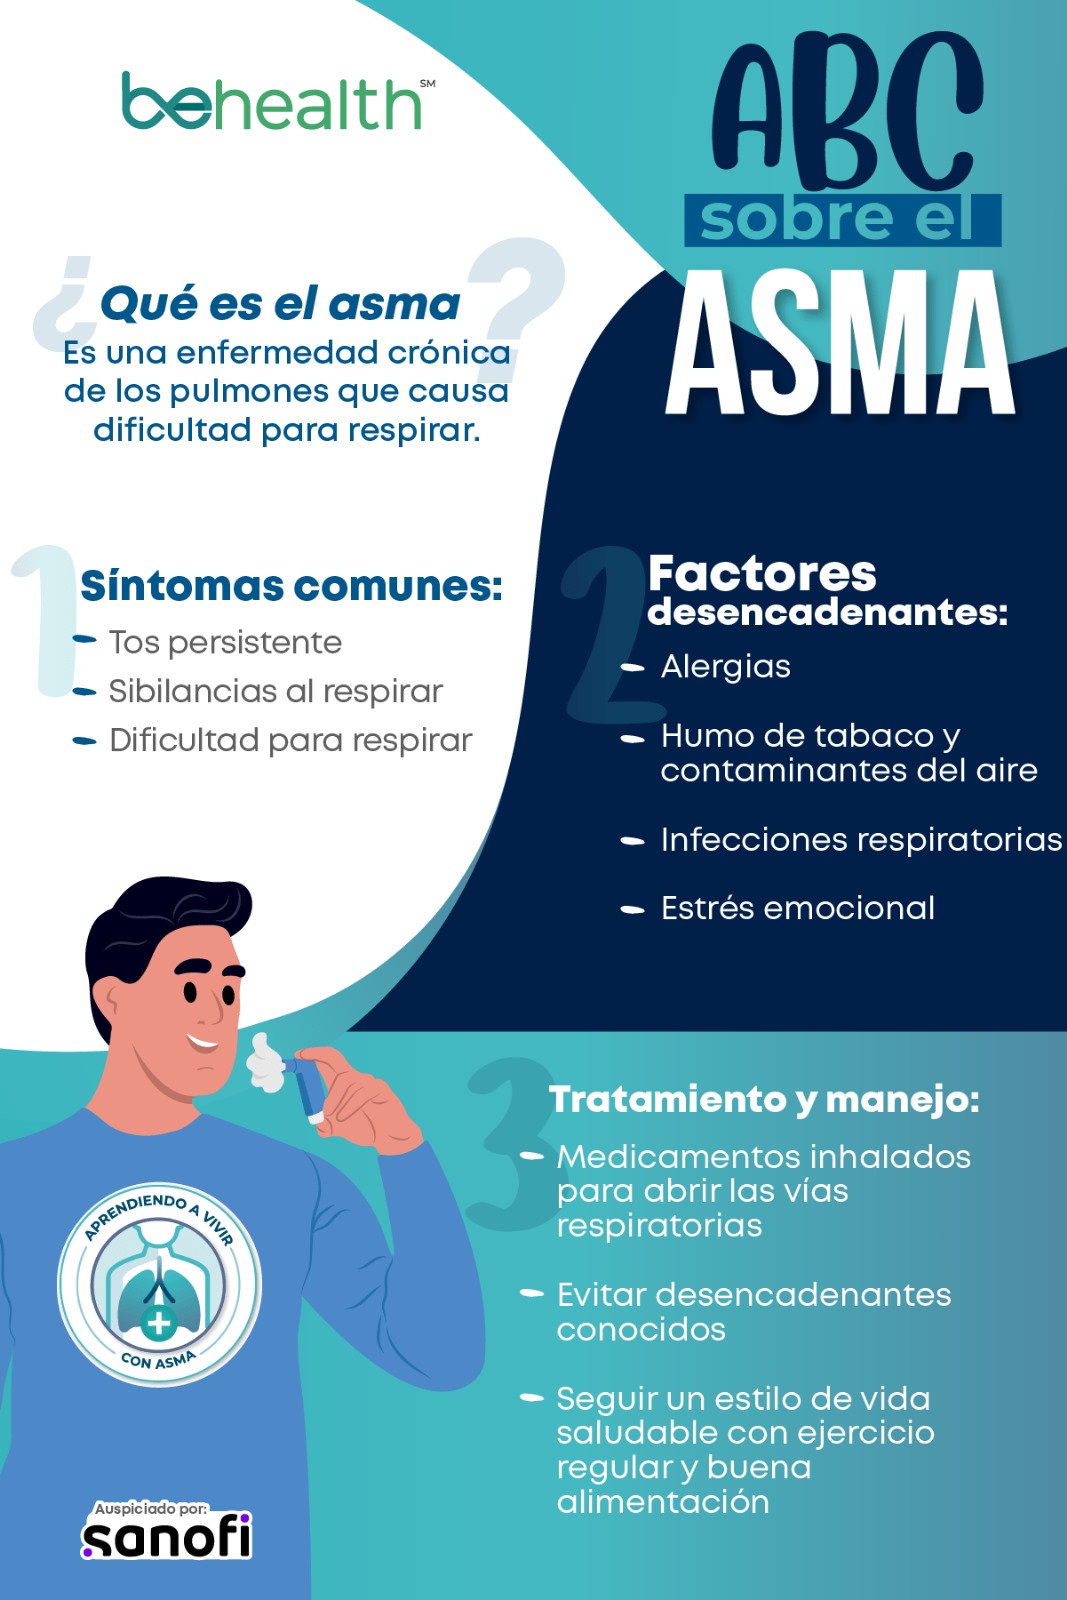 ABC del asma